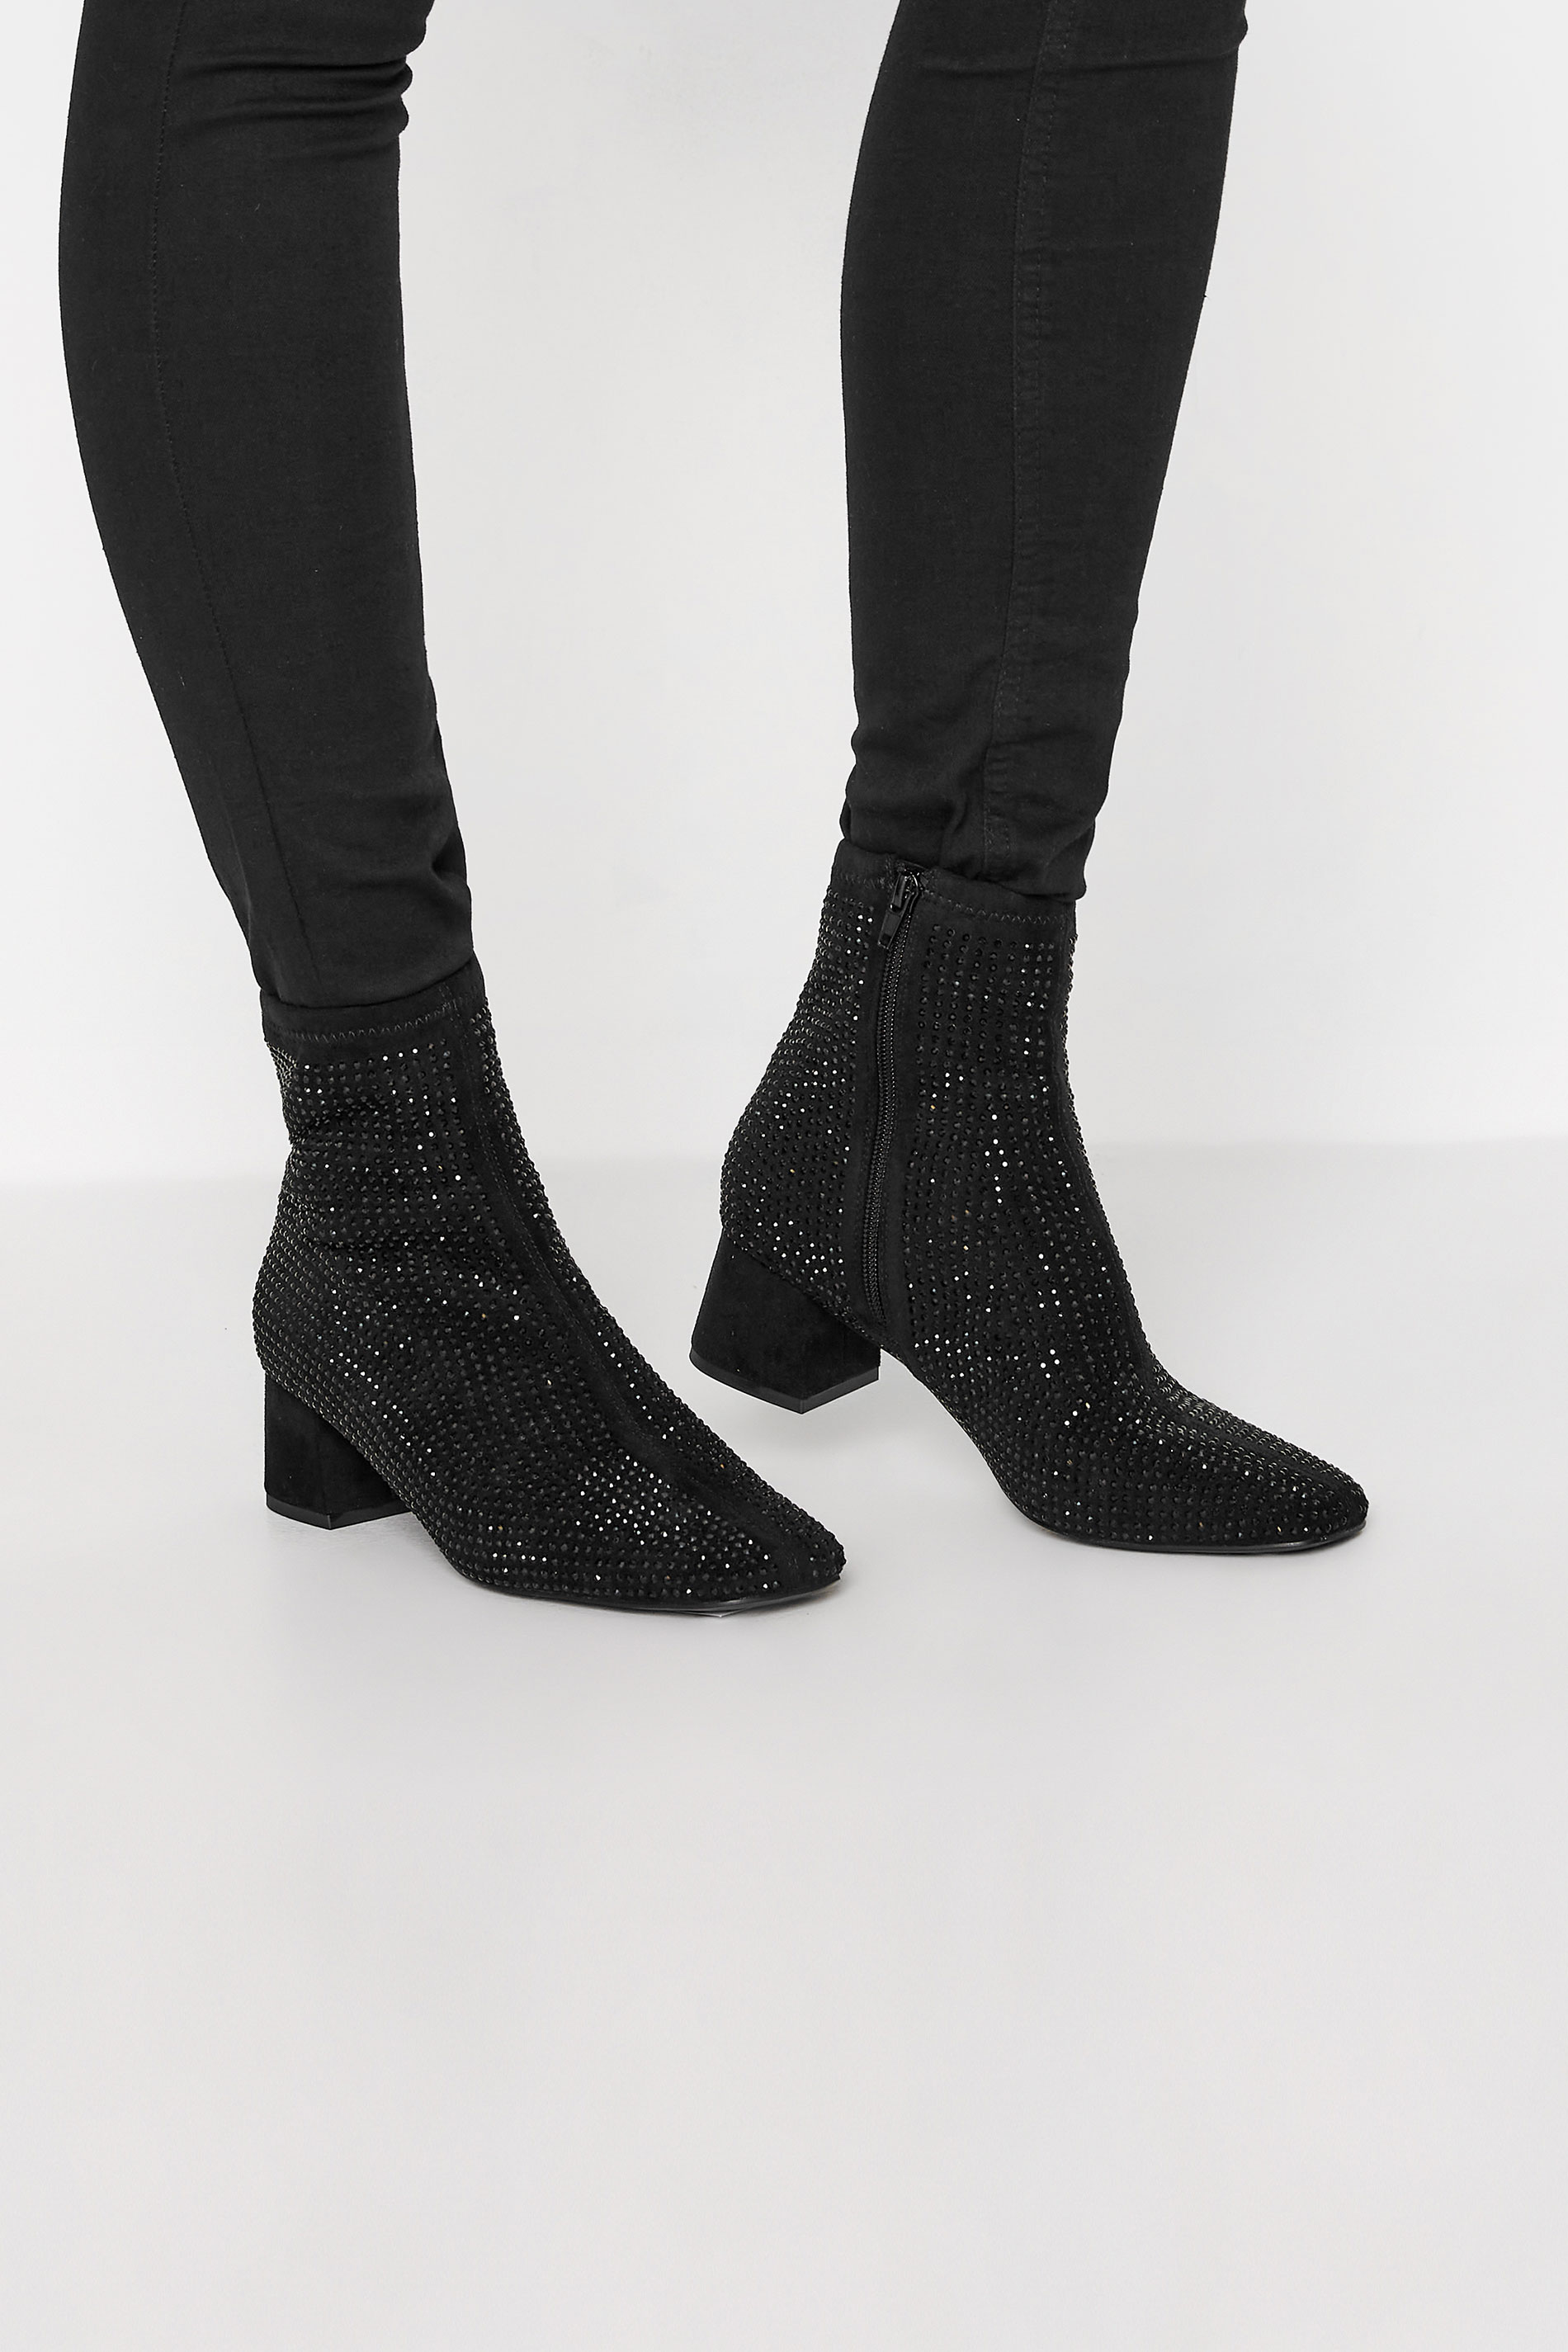 LTS Black Diamante Block Heel Boots In Standard D Fit | Long Tall Sally 1